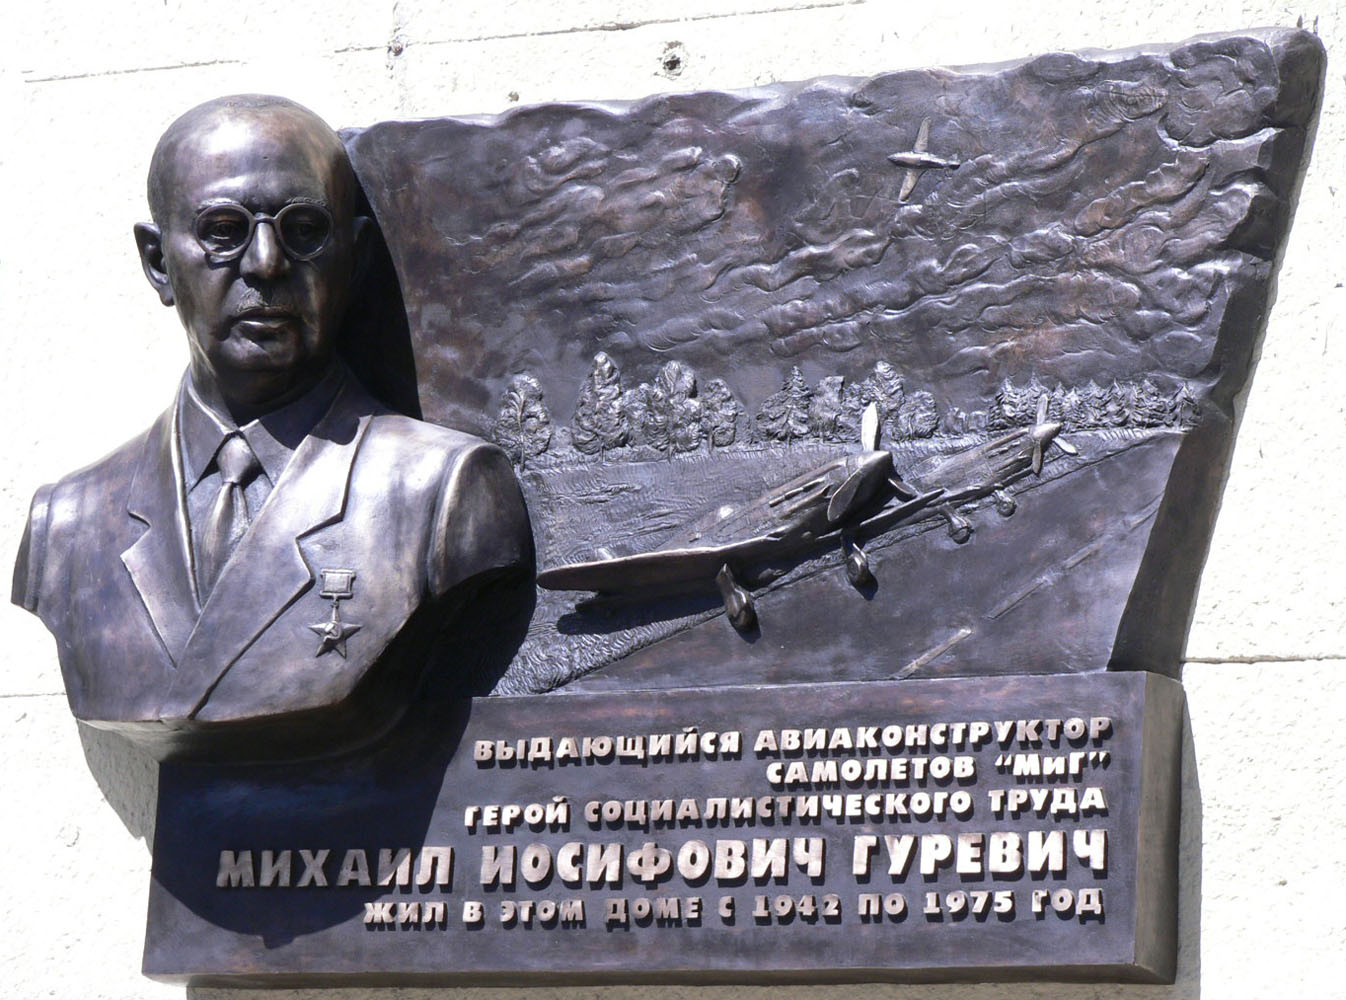 Мемориальная доска "Mikhail Iosifovich Gurevich"